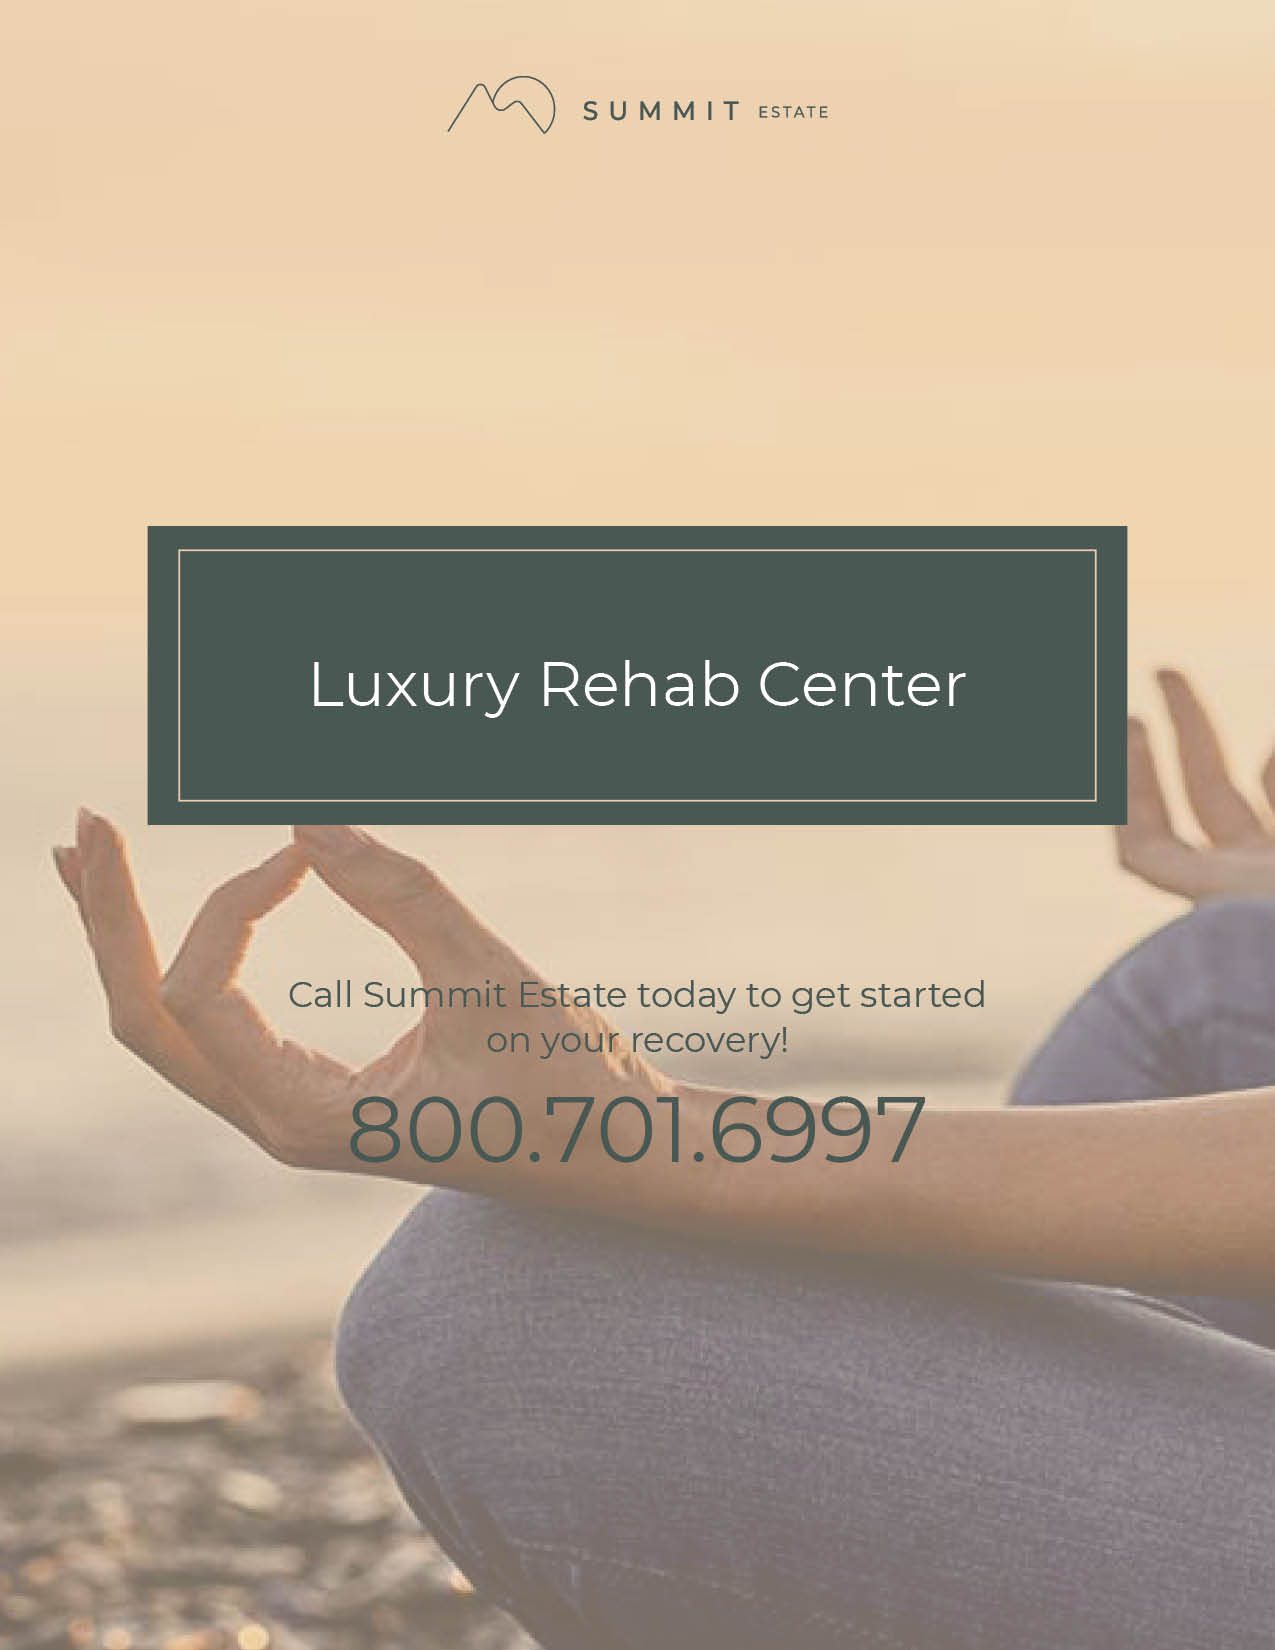 summit estate holistic luxury rehab center